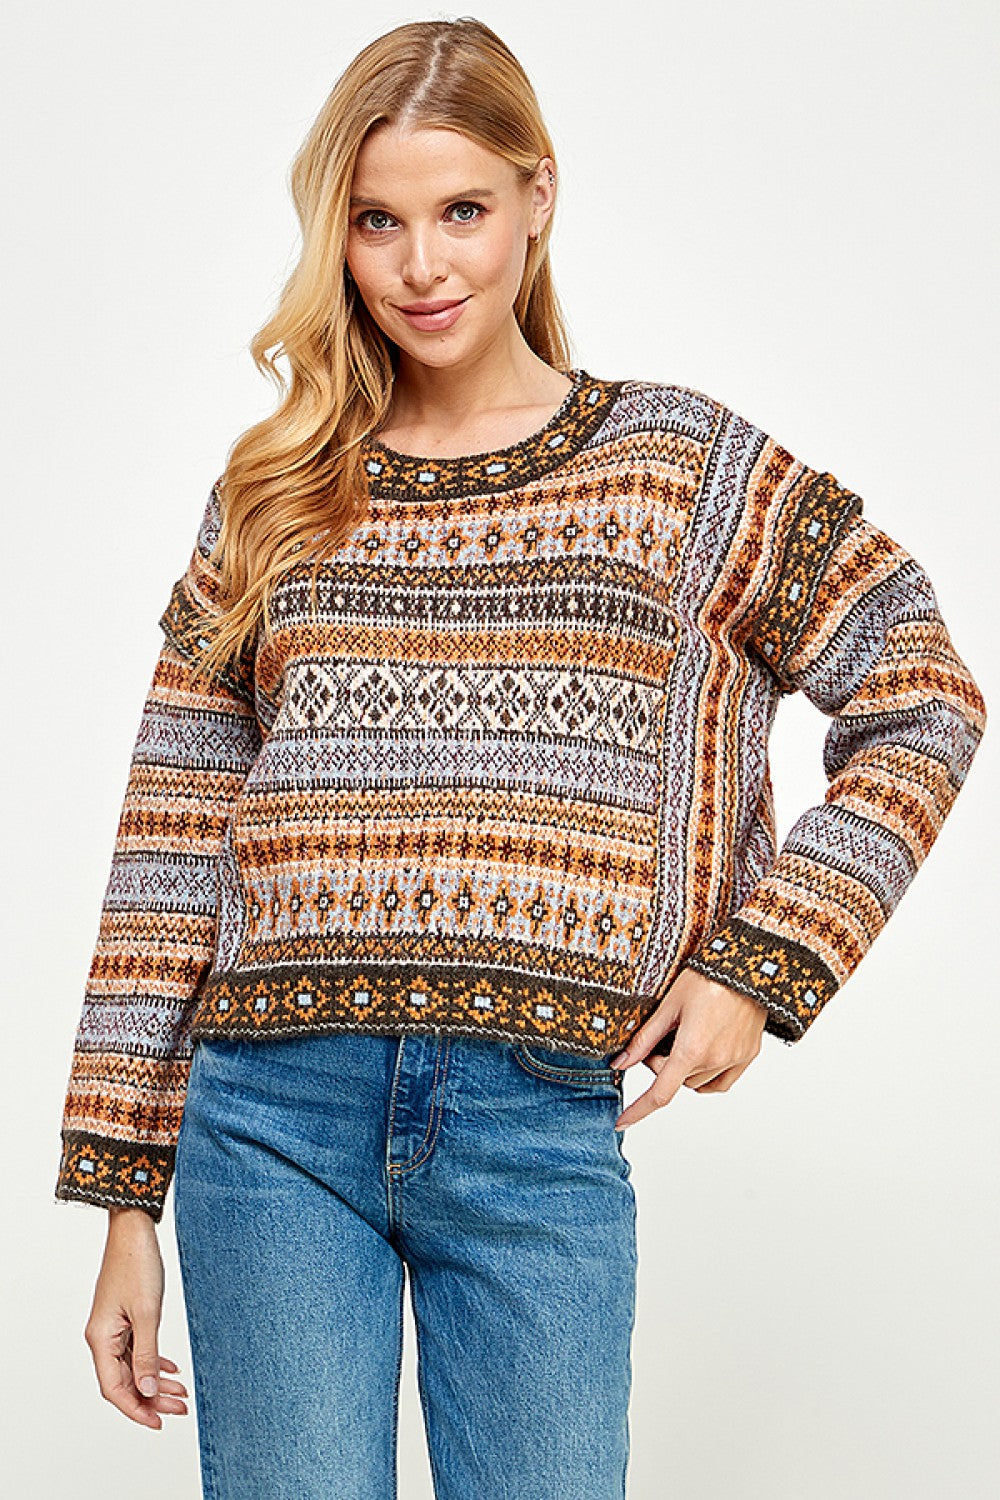 Hannah Knit Sweater